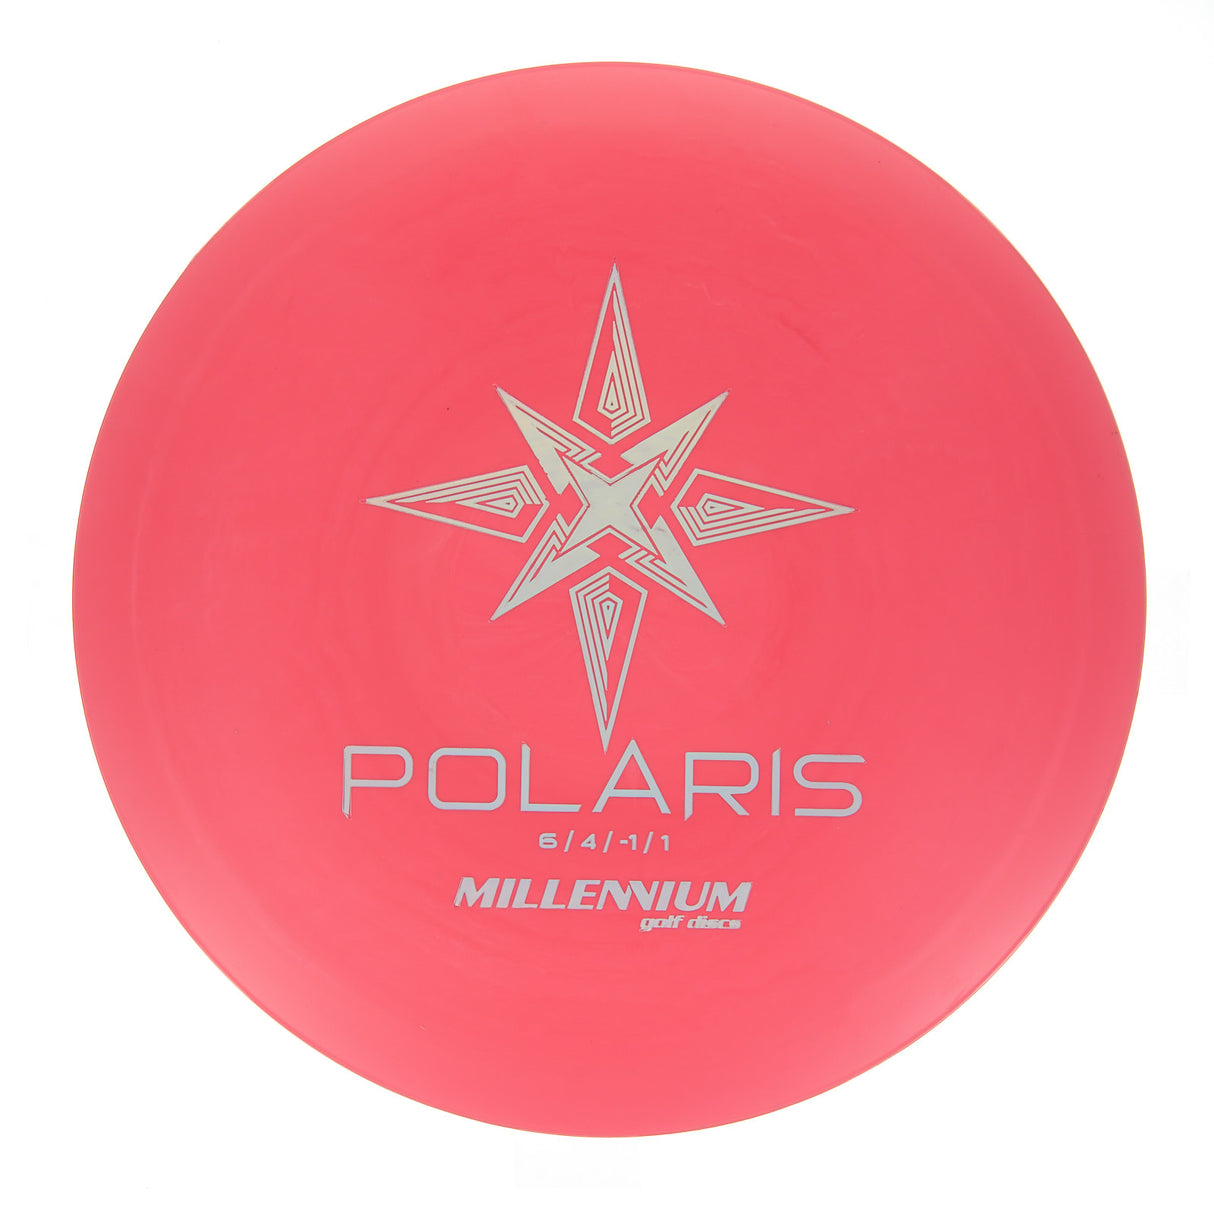 Millennium Polaris LS - Standard 171g | Style 0001